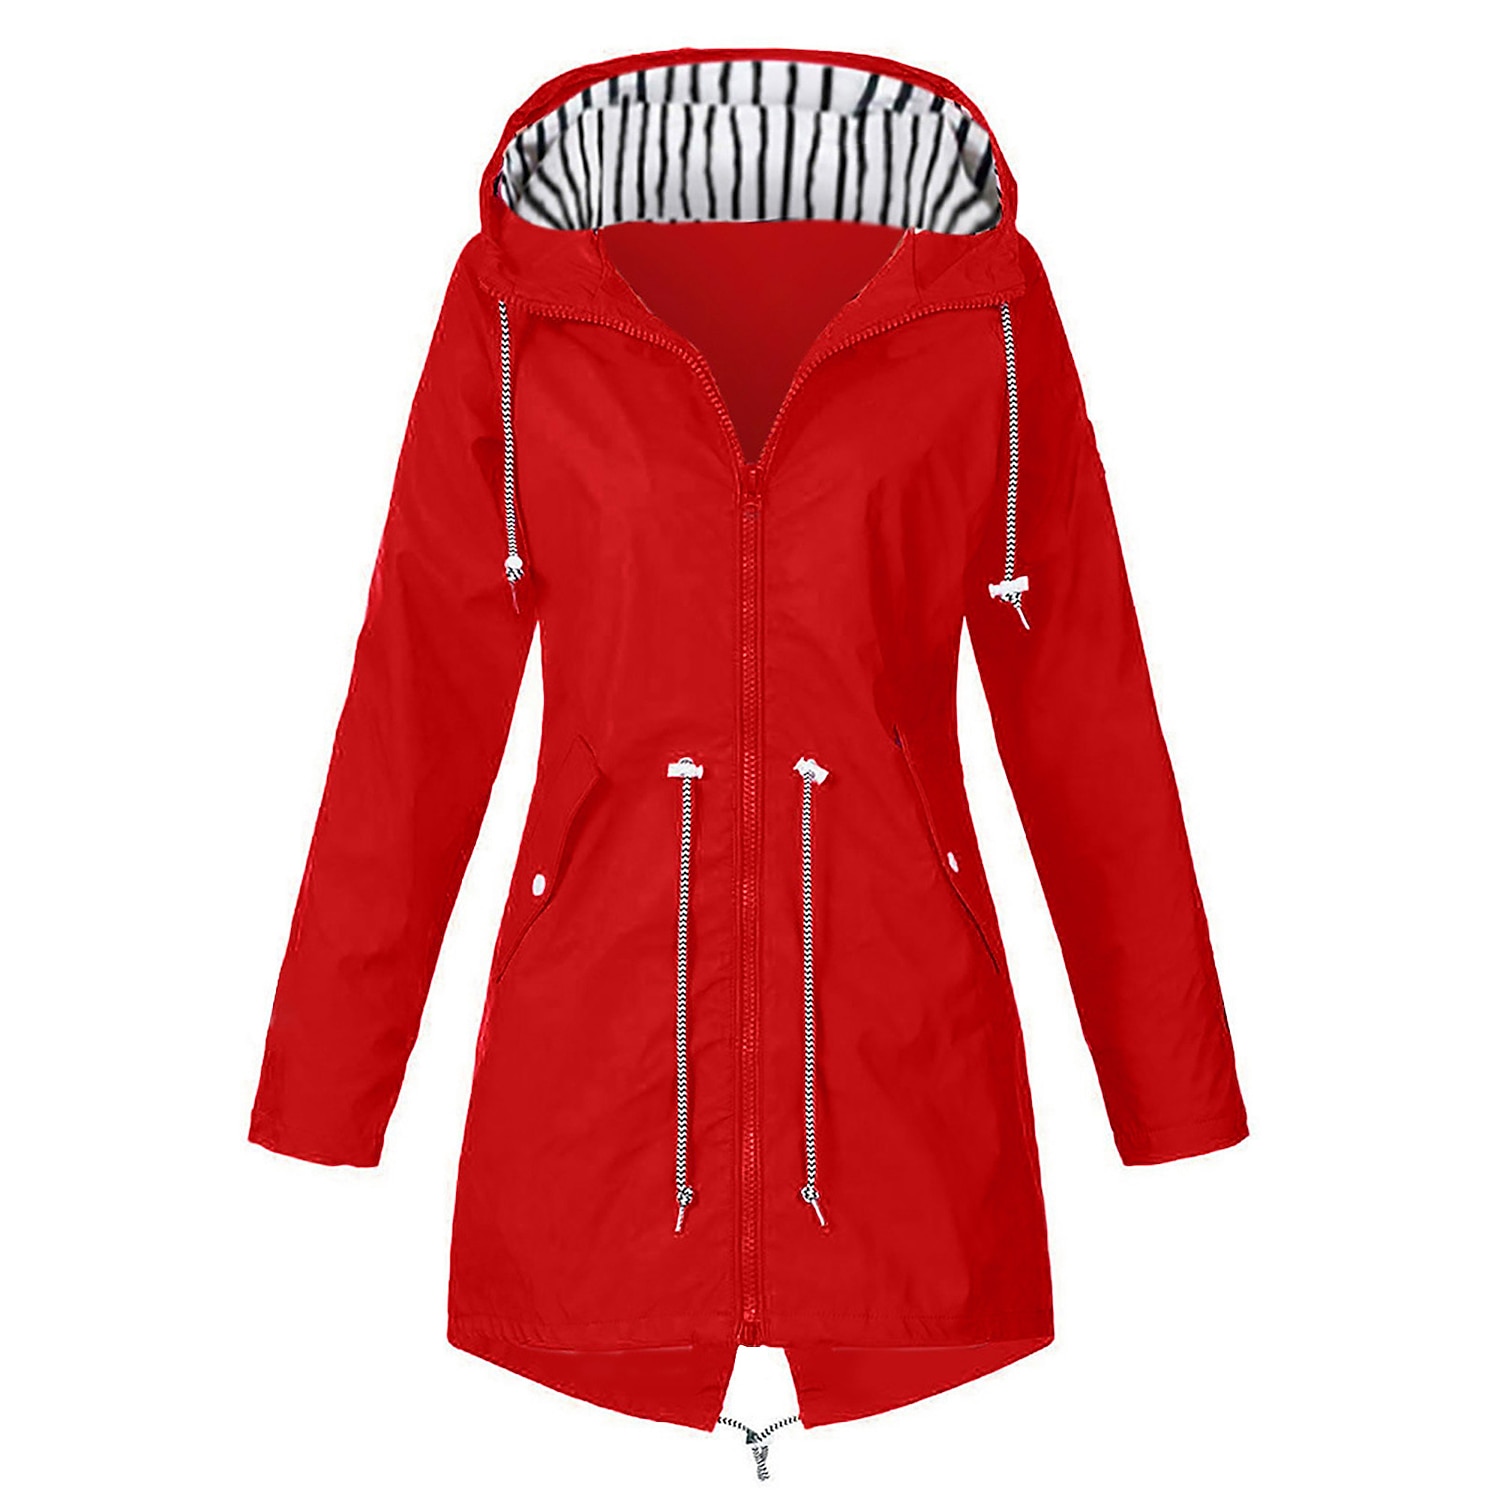 Qtinghua Women's Raincoats Windbreaker Rain Jacket Waterproof Lightweight Outdoor Hooded Trench Coats 